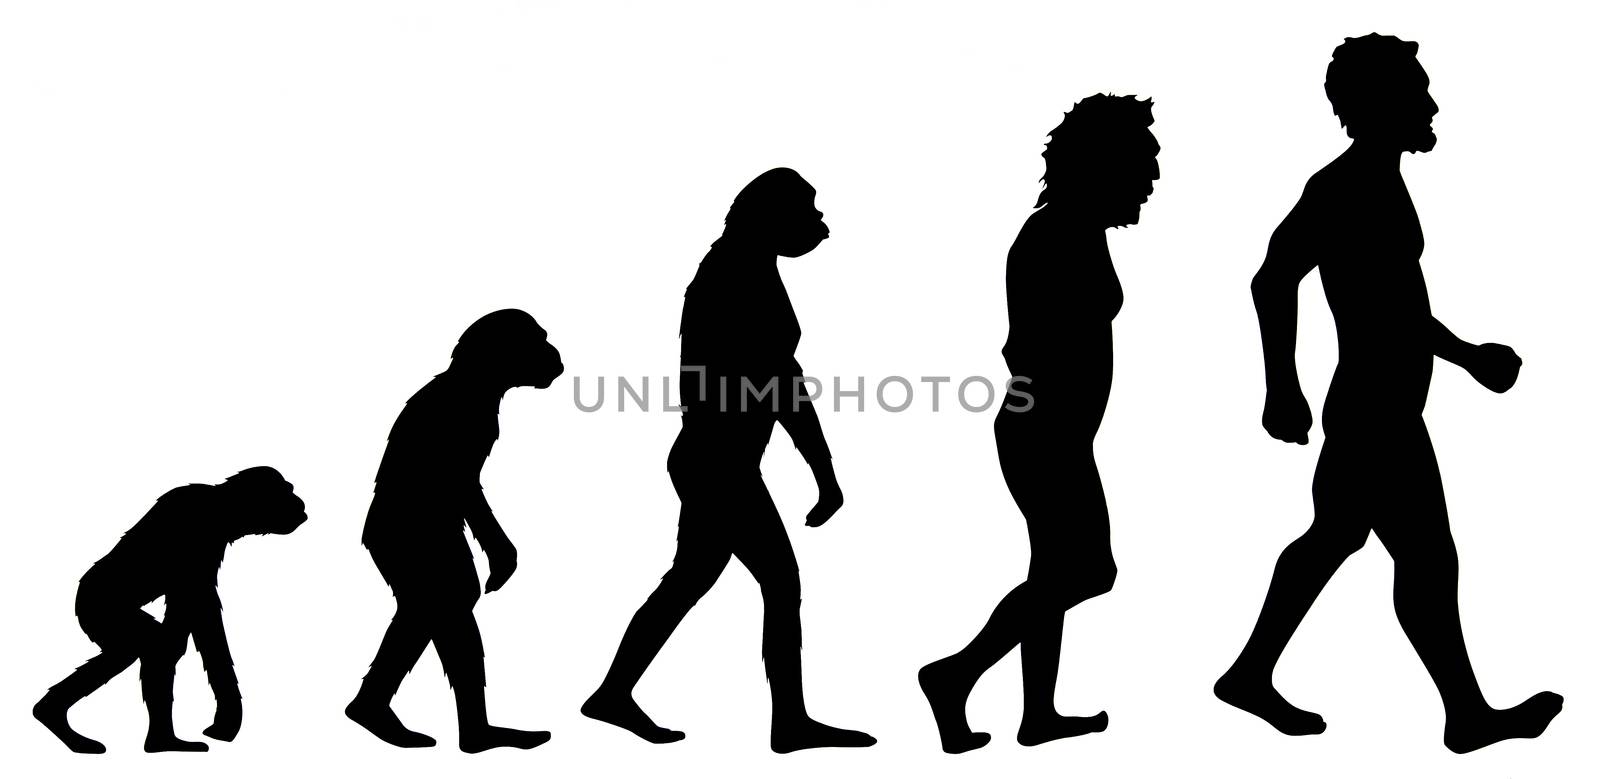 Human evolution graphic by esebene